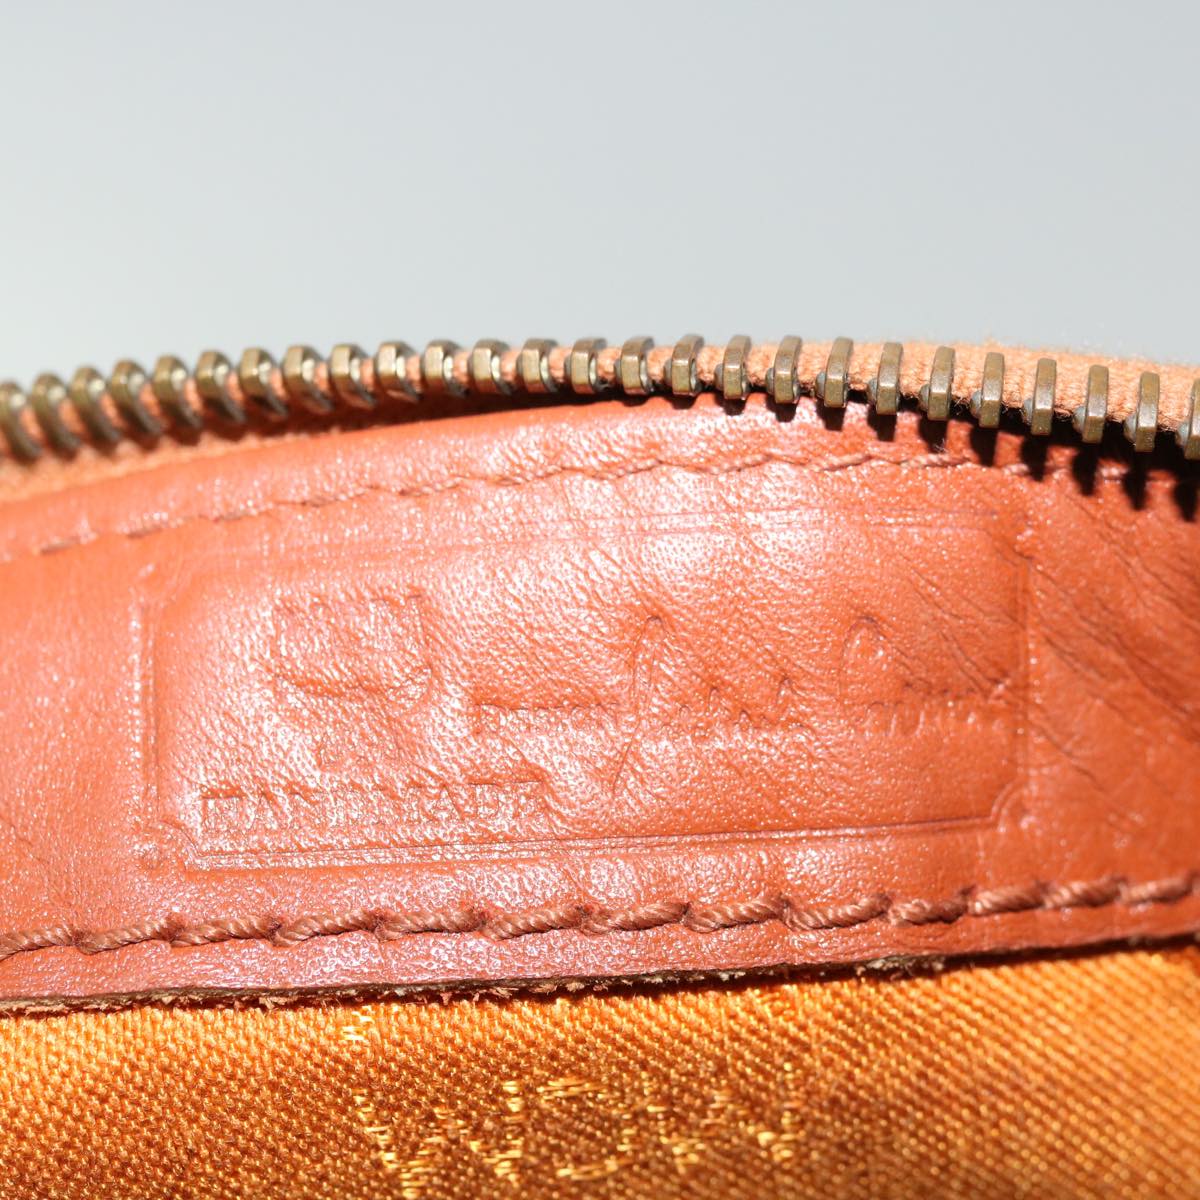 MCM Vicetos Logogram Hand Bag PVC Leather Brown Auth ki4241